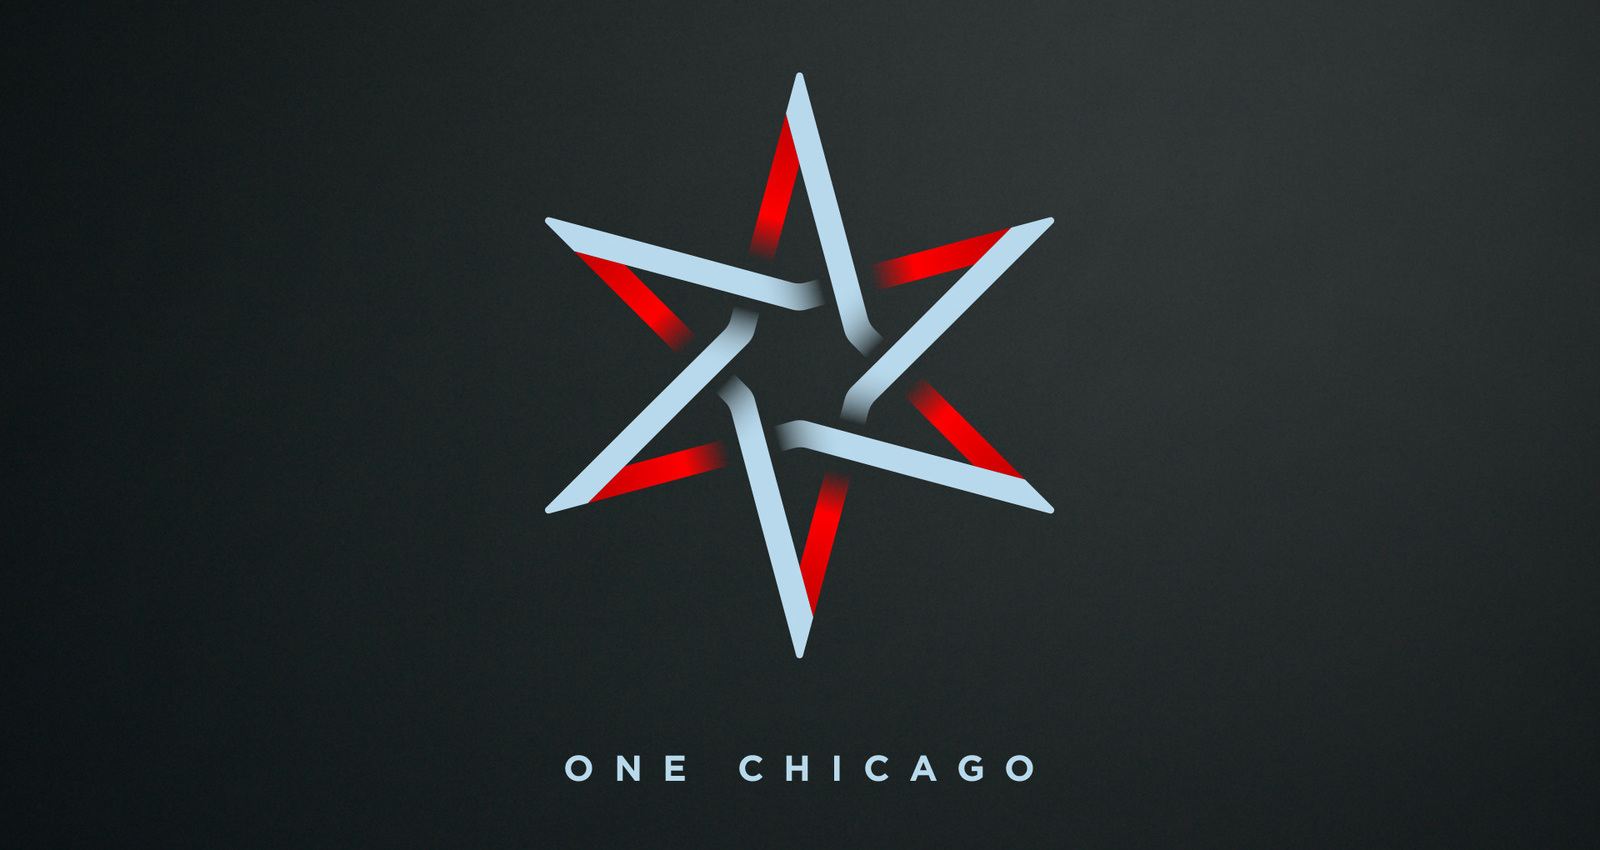 One Chicago